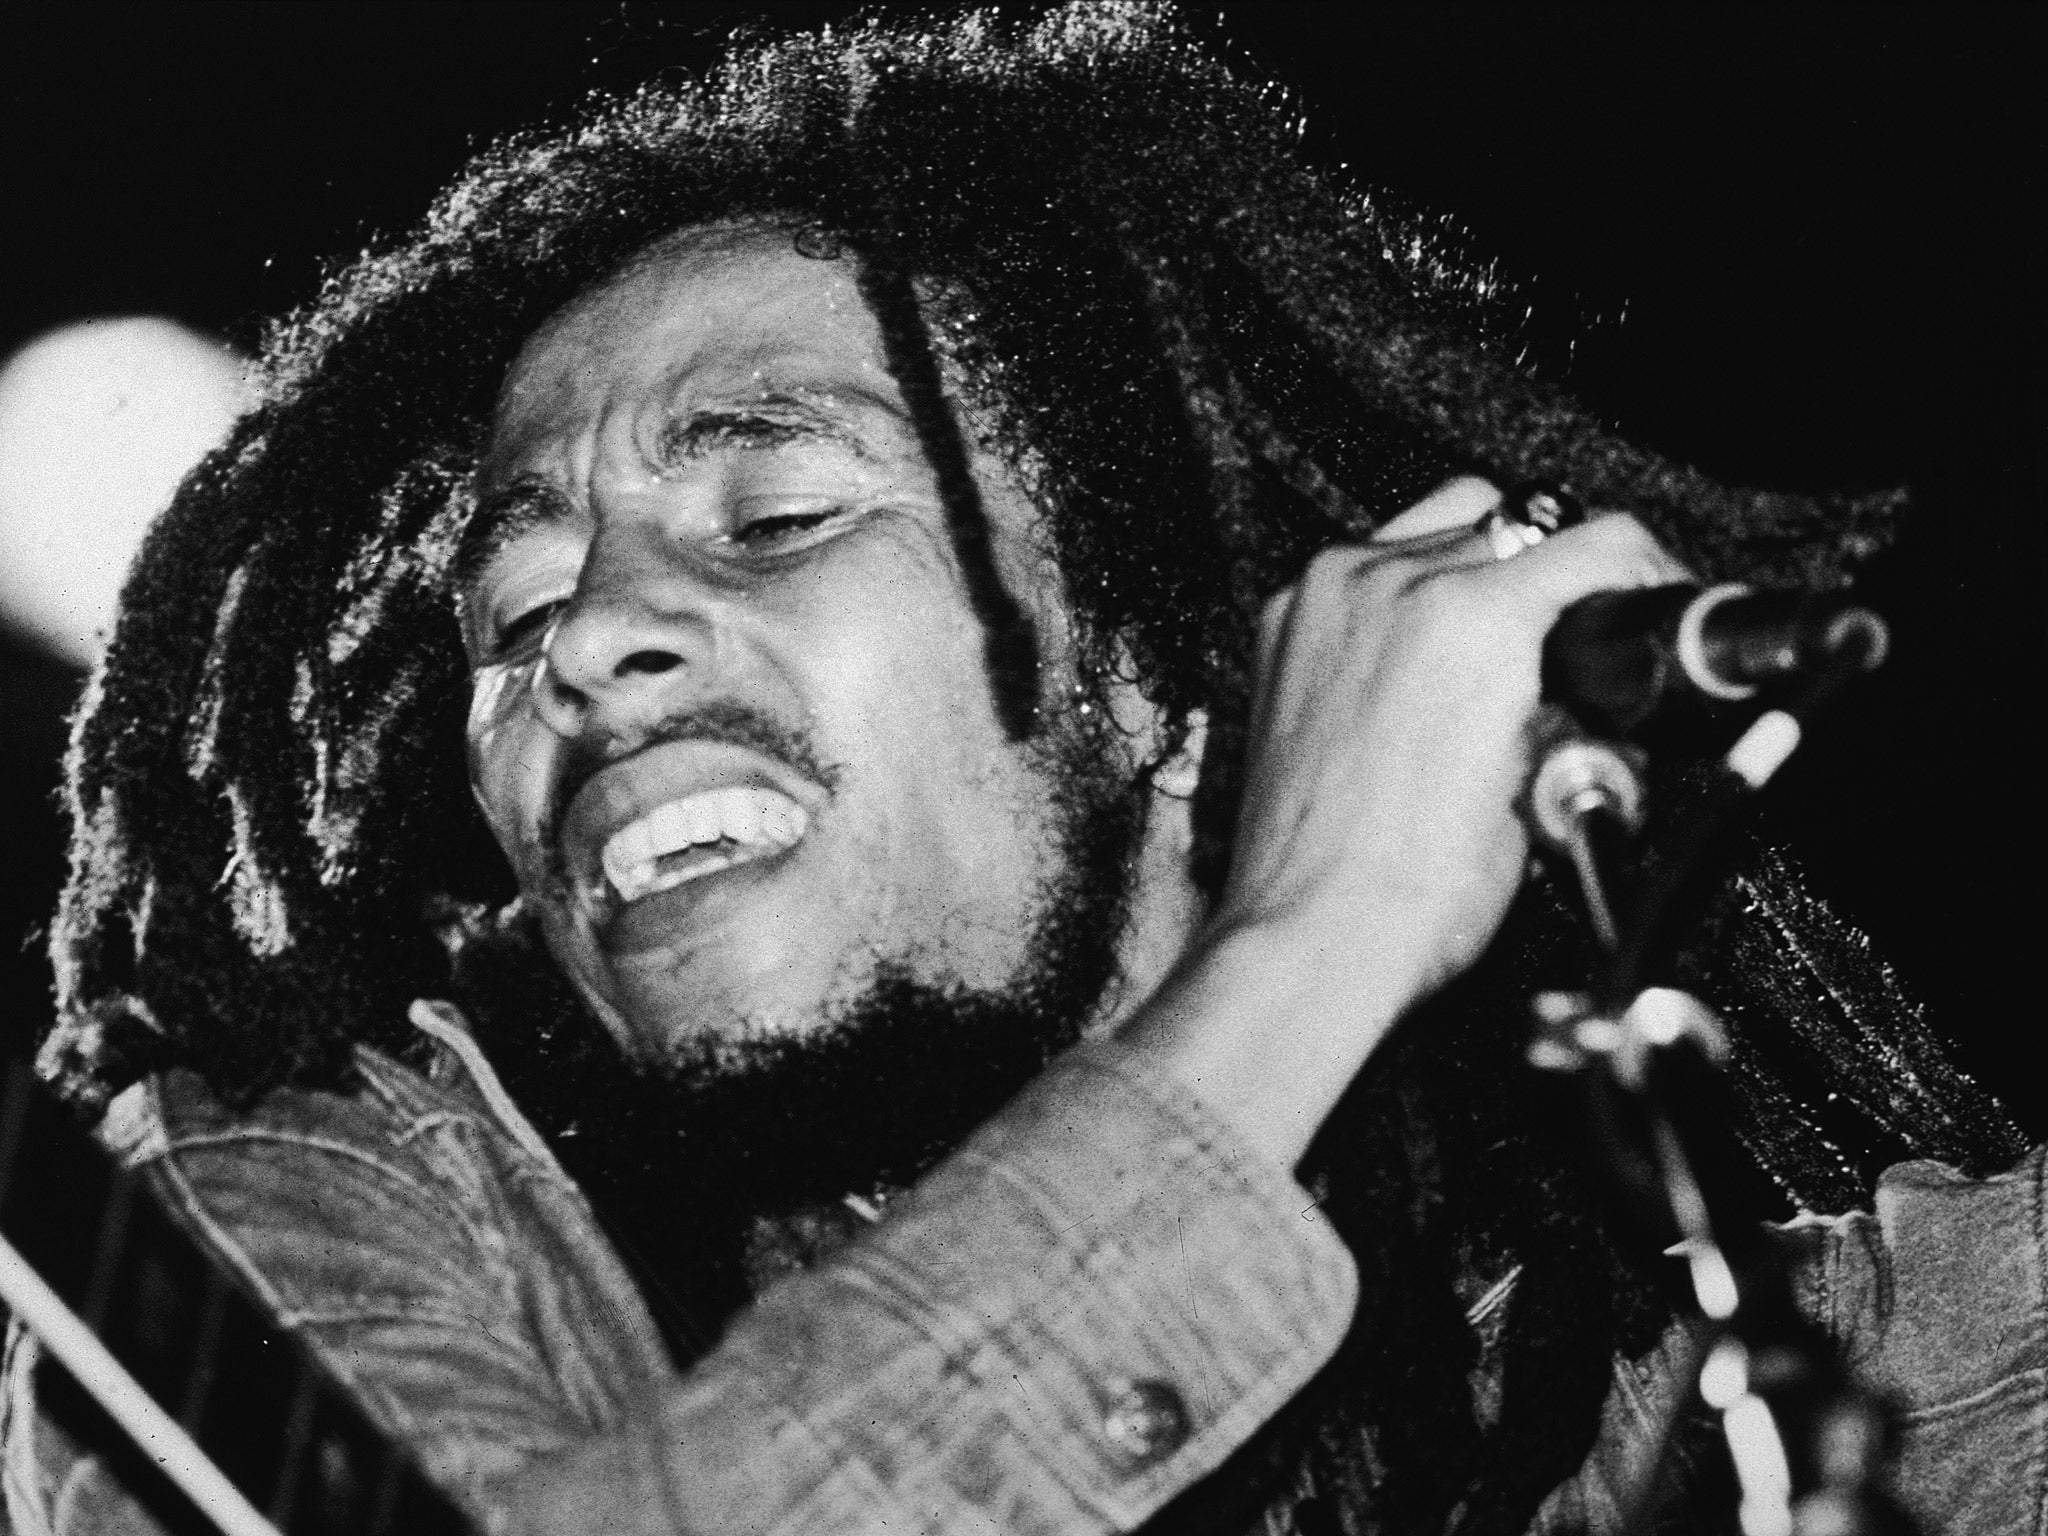 Bob Marley performing in 1978